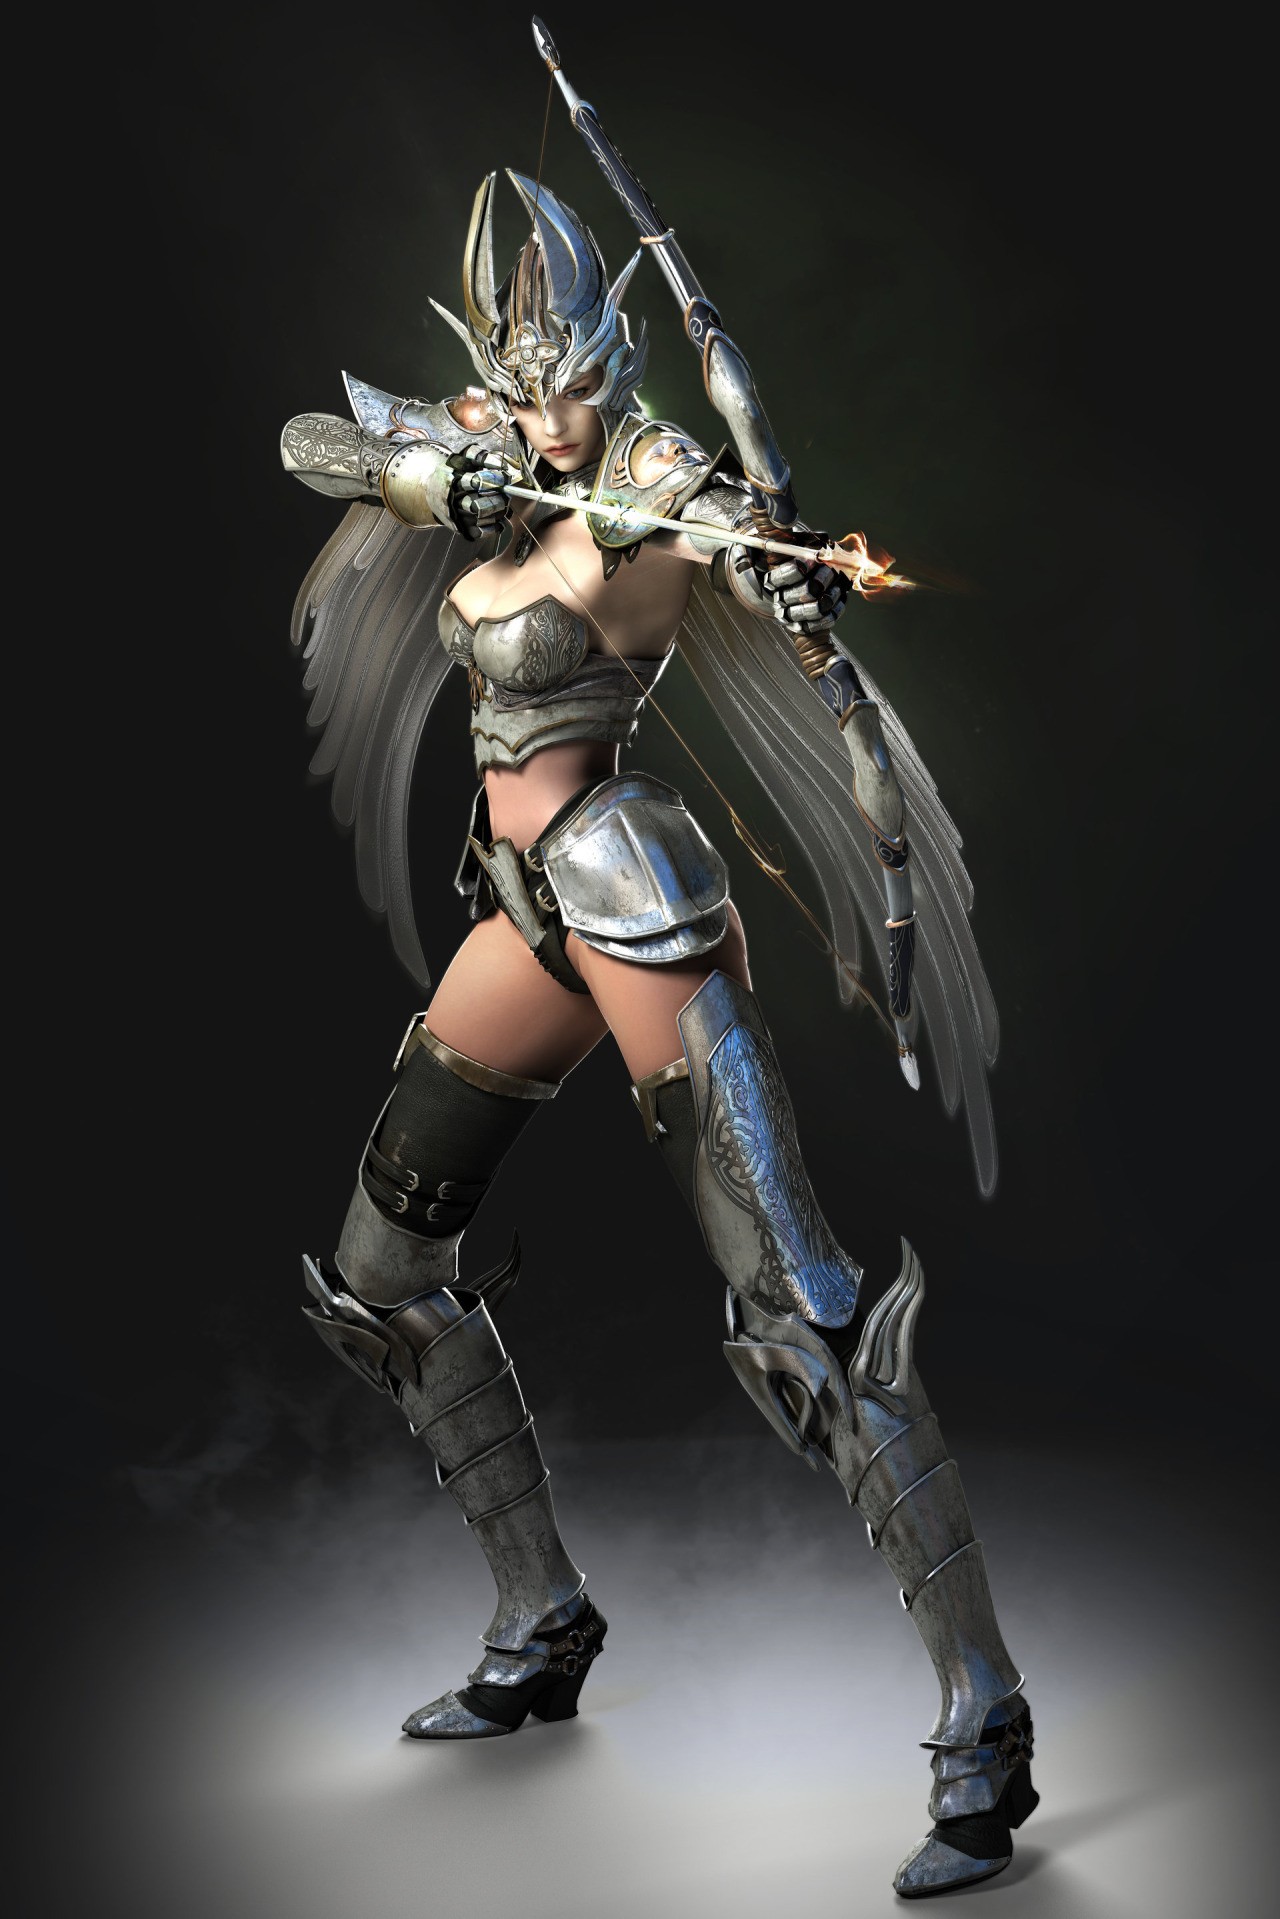 General 1280x1919 digital art archer fantasy girl fantasy art black background simple background bow and arrow aiming